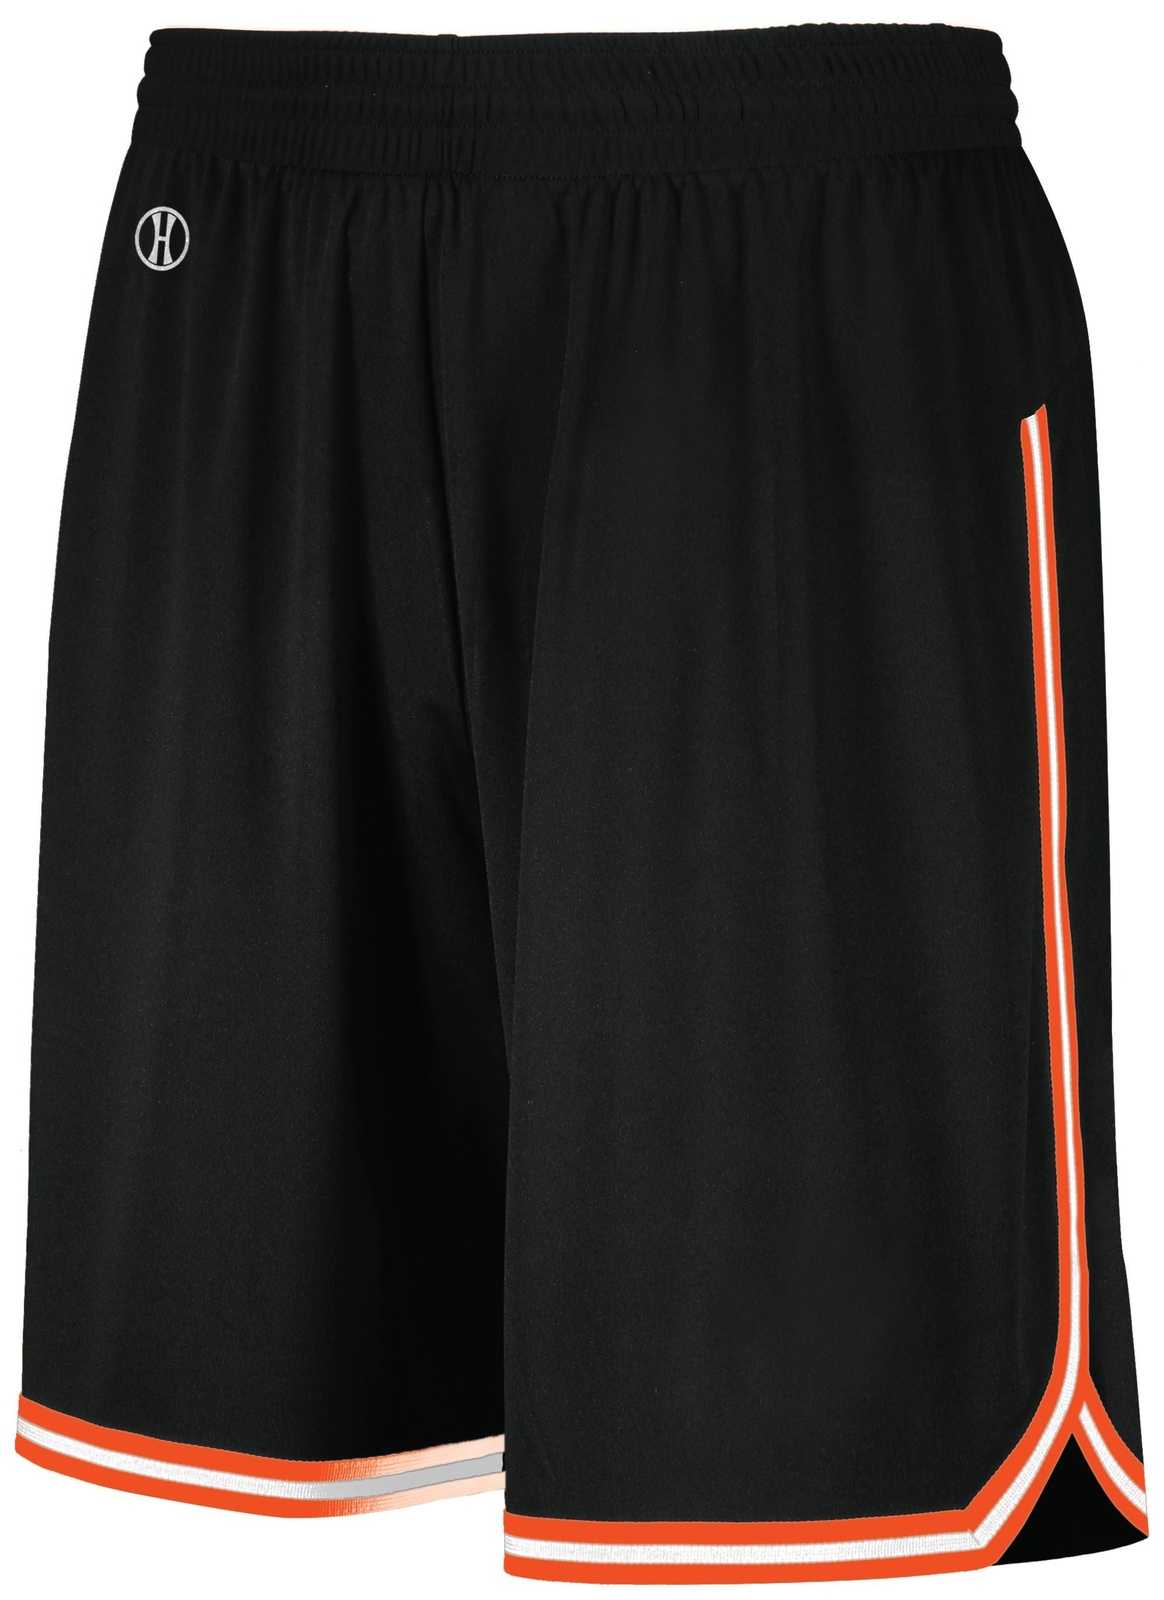 Holloway 224077 Retro Basketball Shorts - Black Orange White - HIT a Double